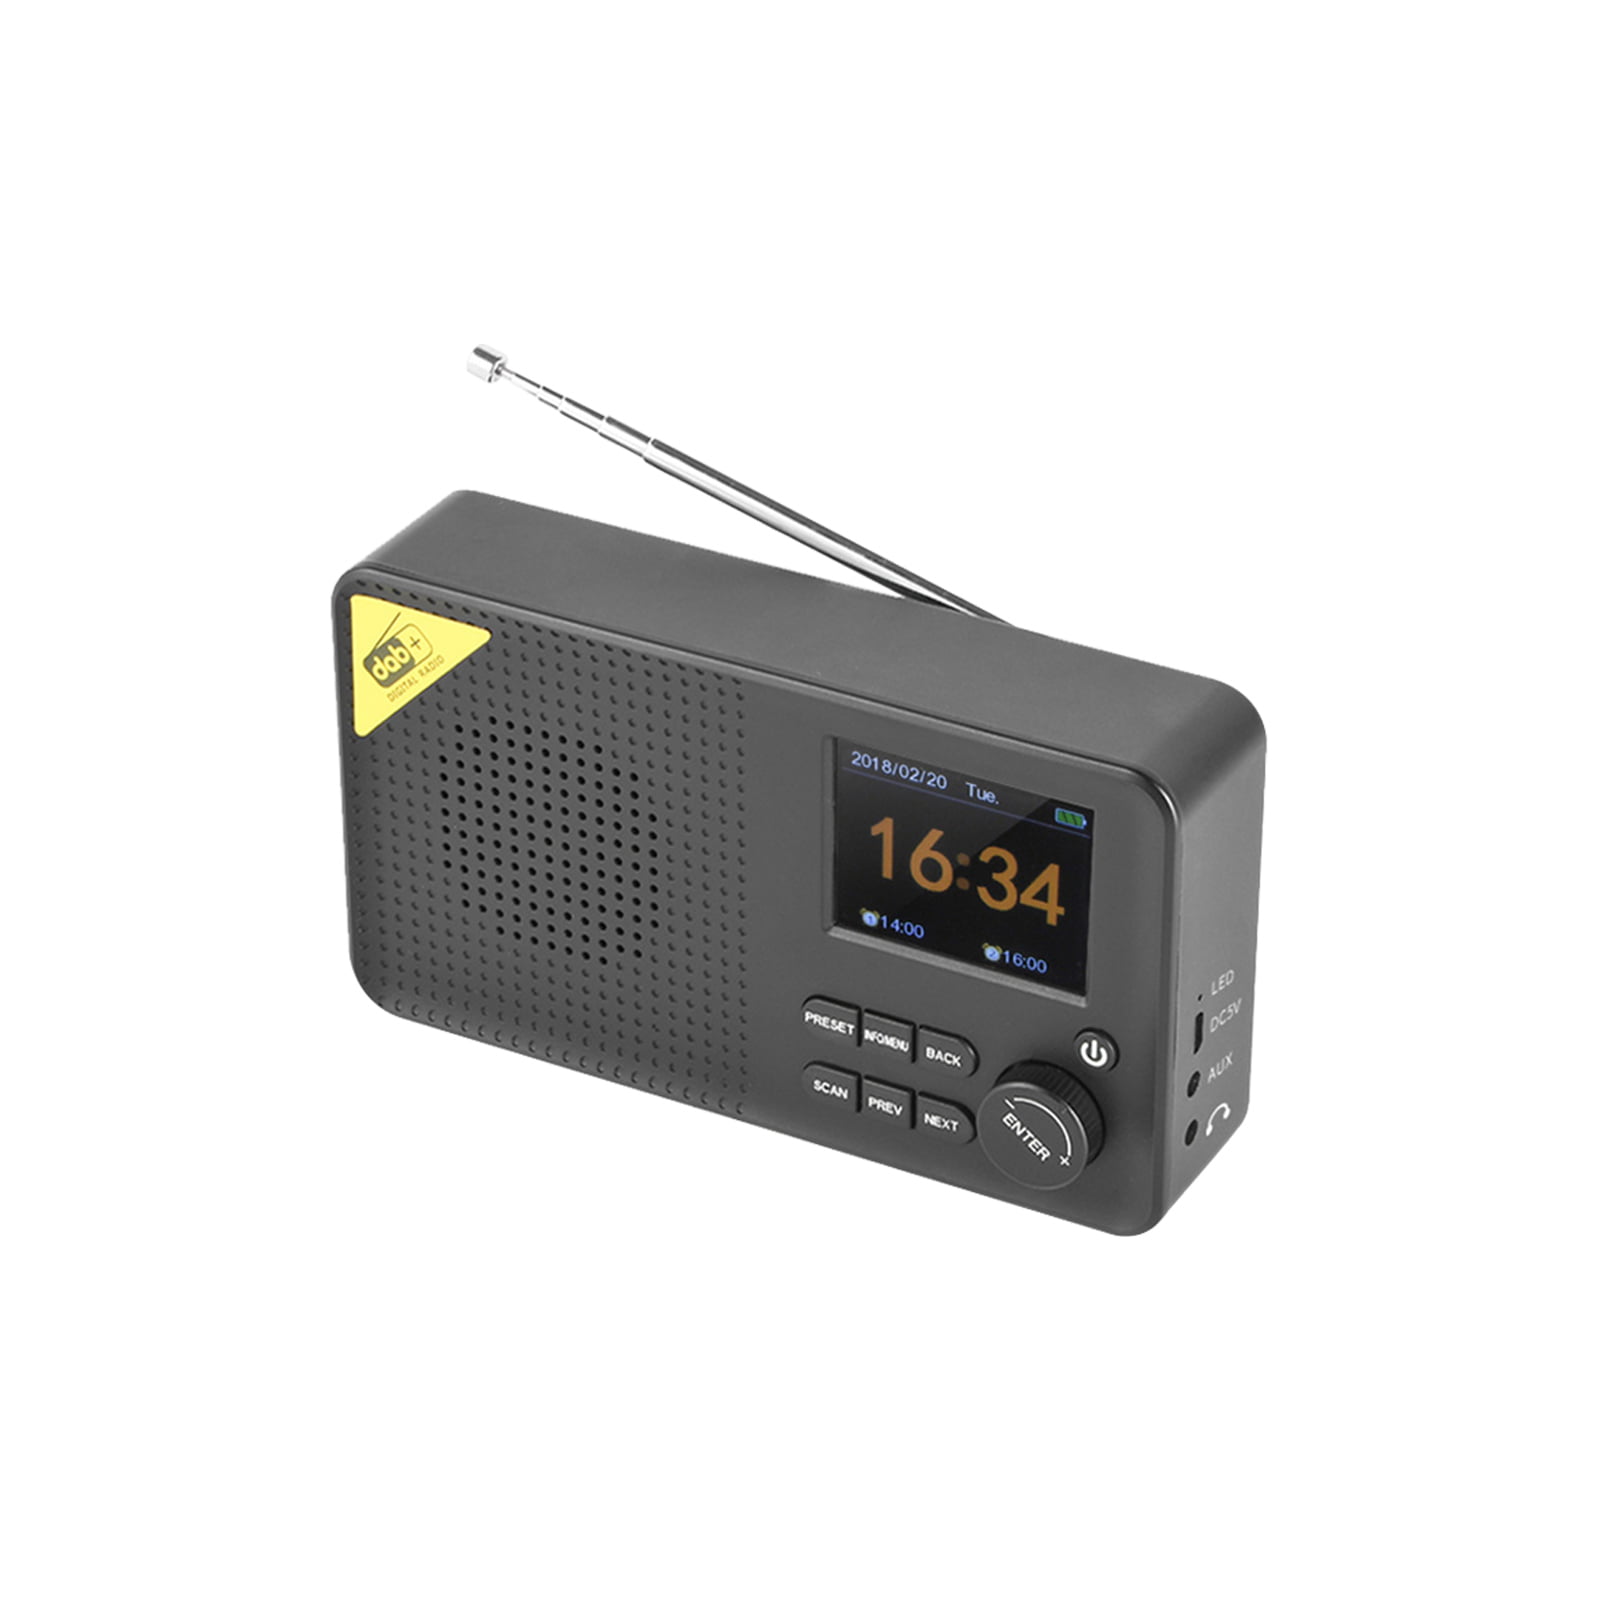 Universal DAB/DAB Digital Radio Receiver Plug-in multi-function DAB receiver